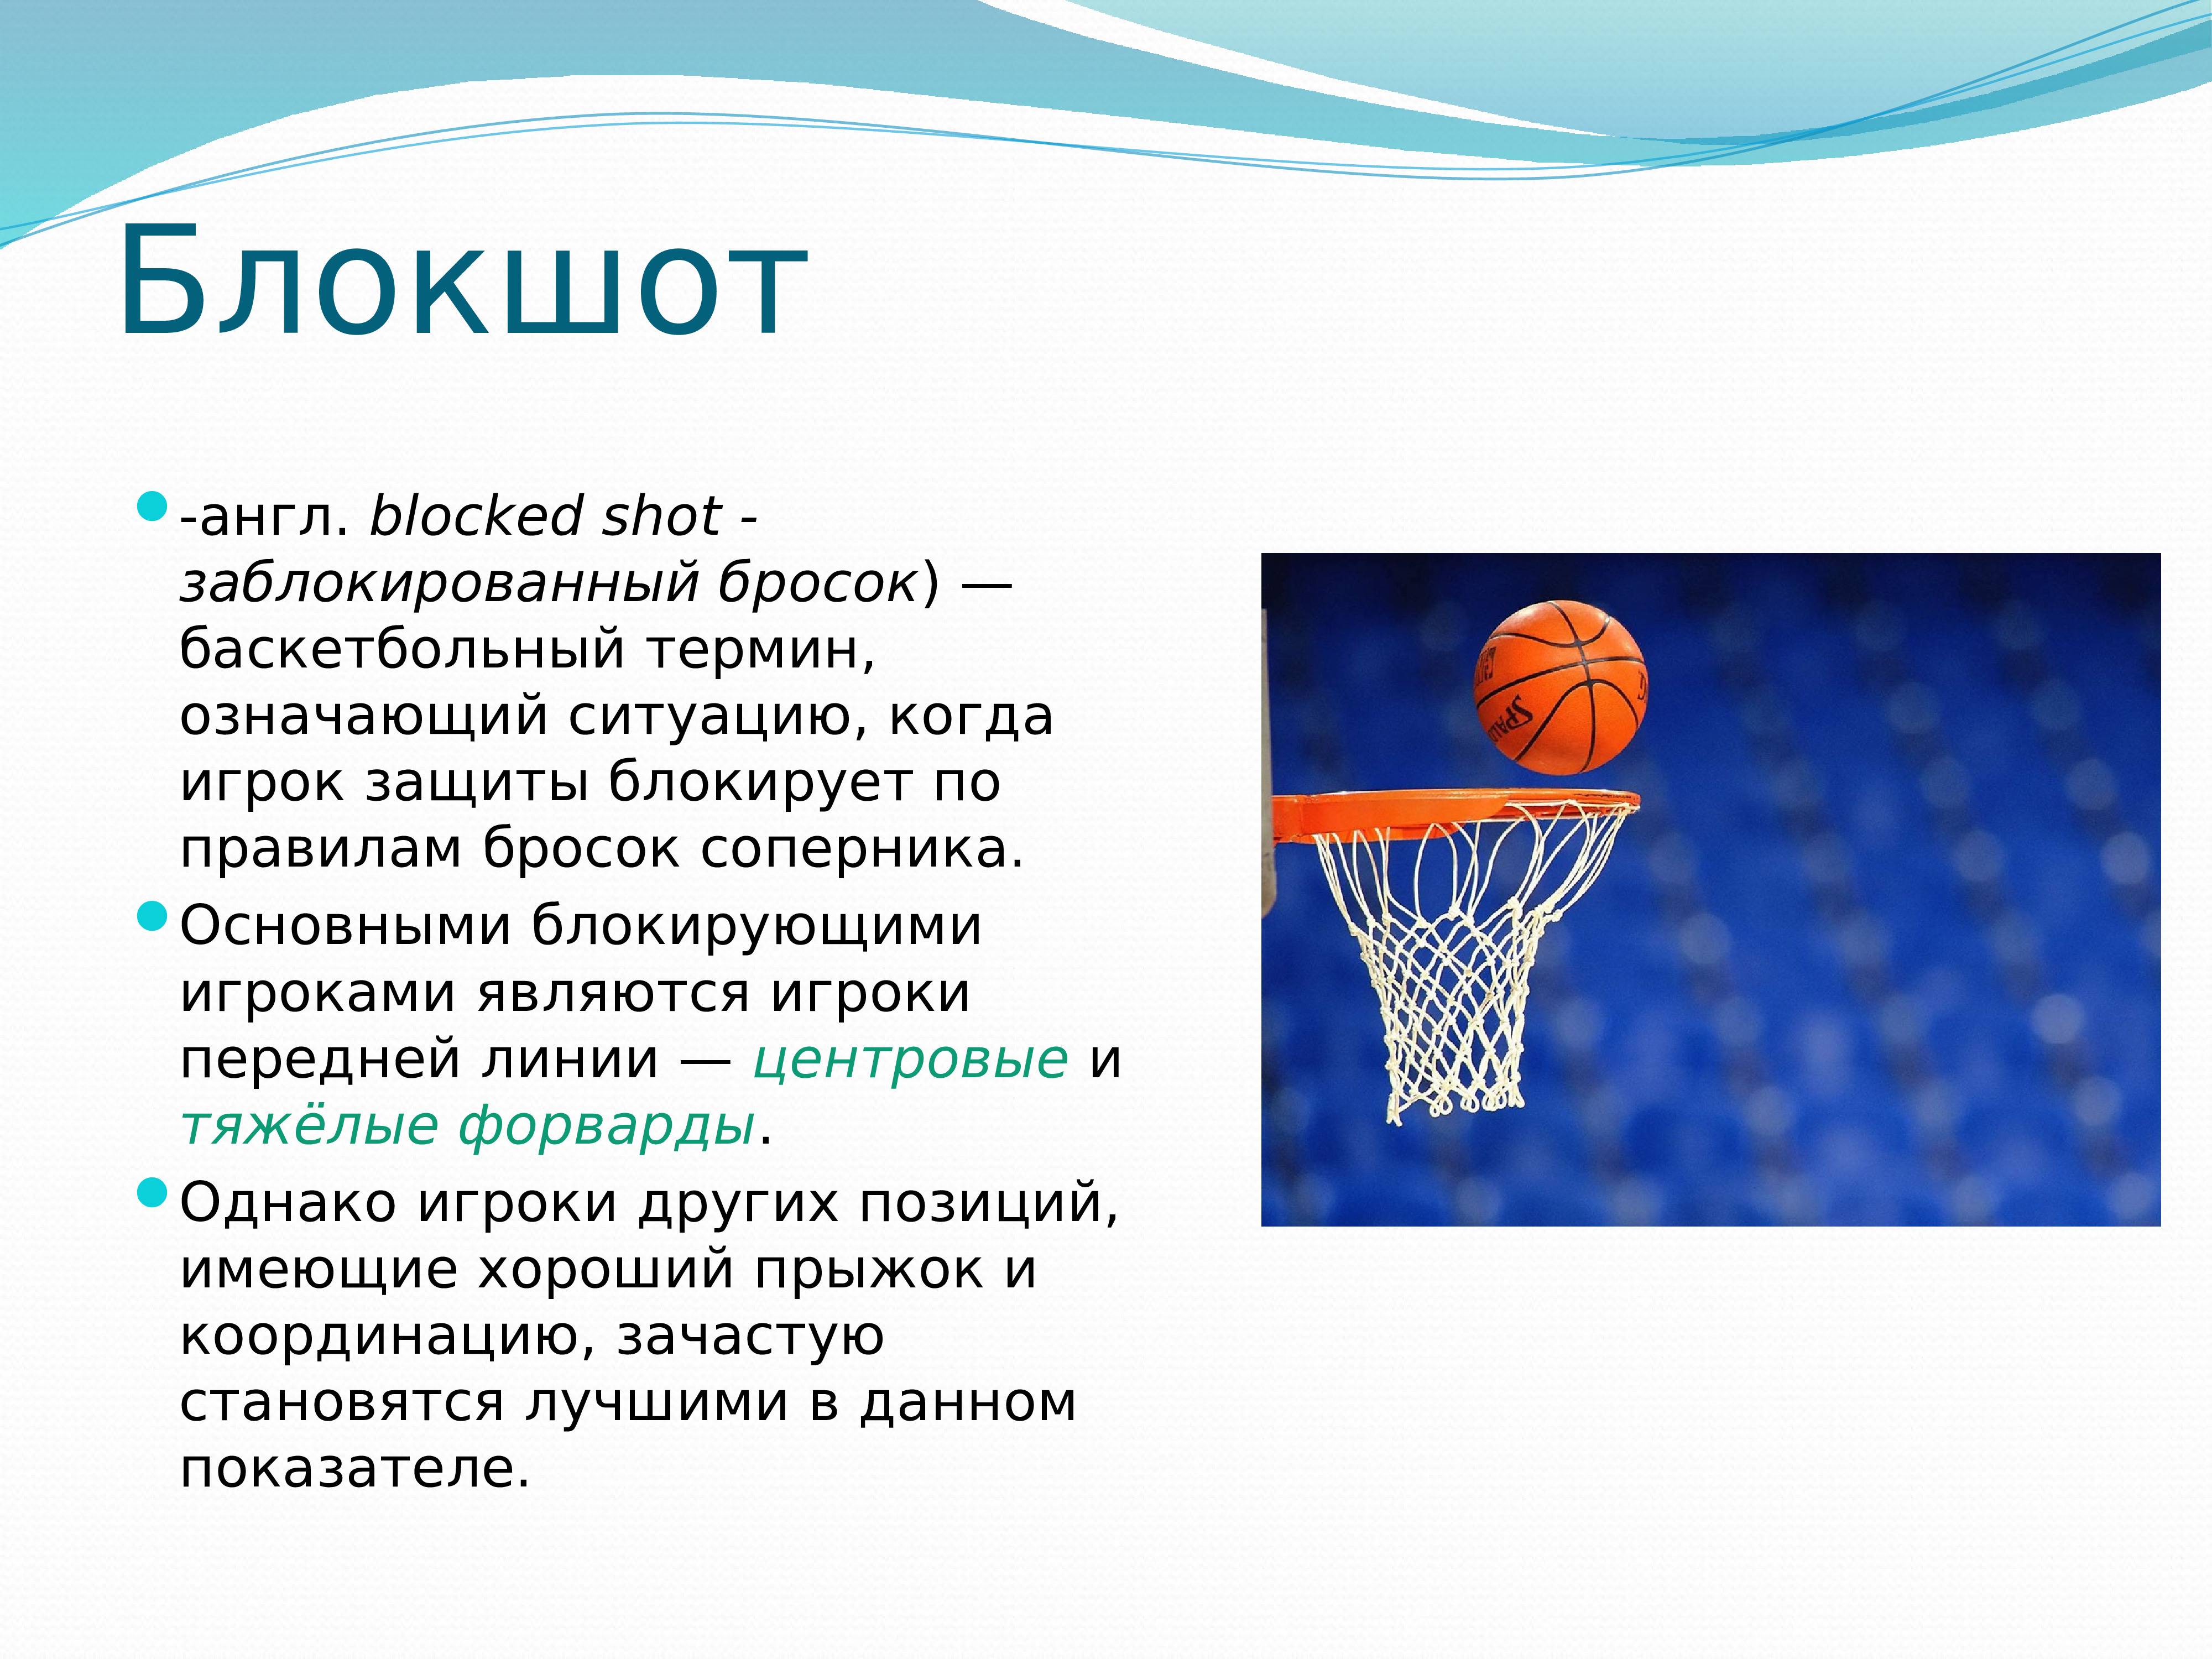 Методика игры в баскетбол. Баскетбольные термины. Понятие баскетбол. Основные термины в баскетболе. История баскетбола презентация.